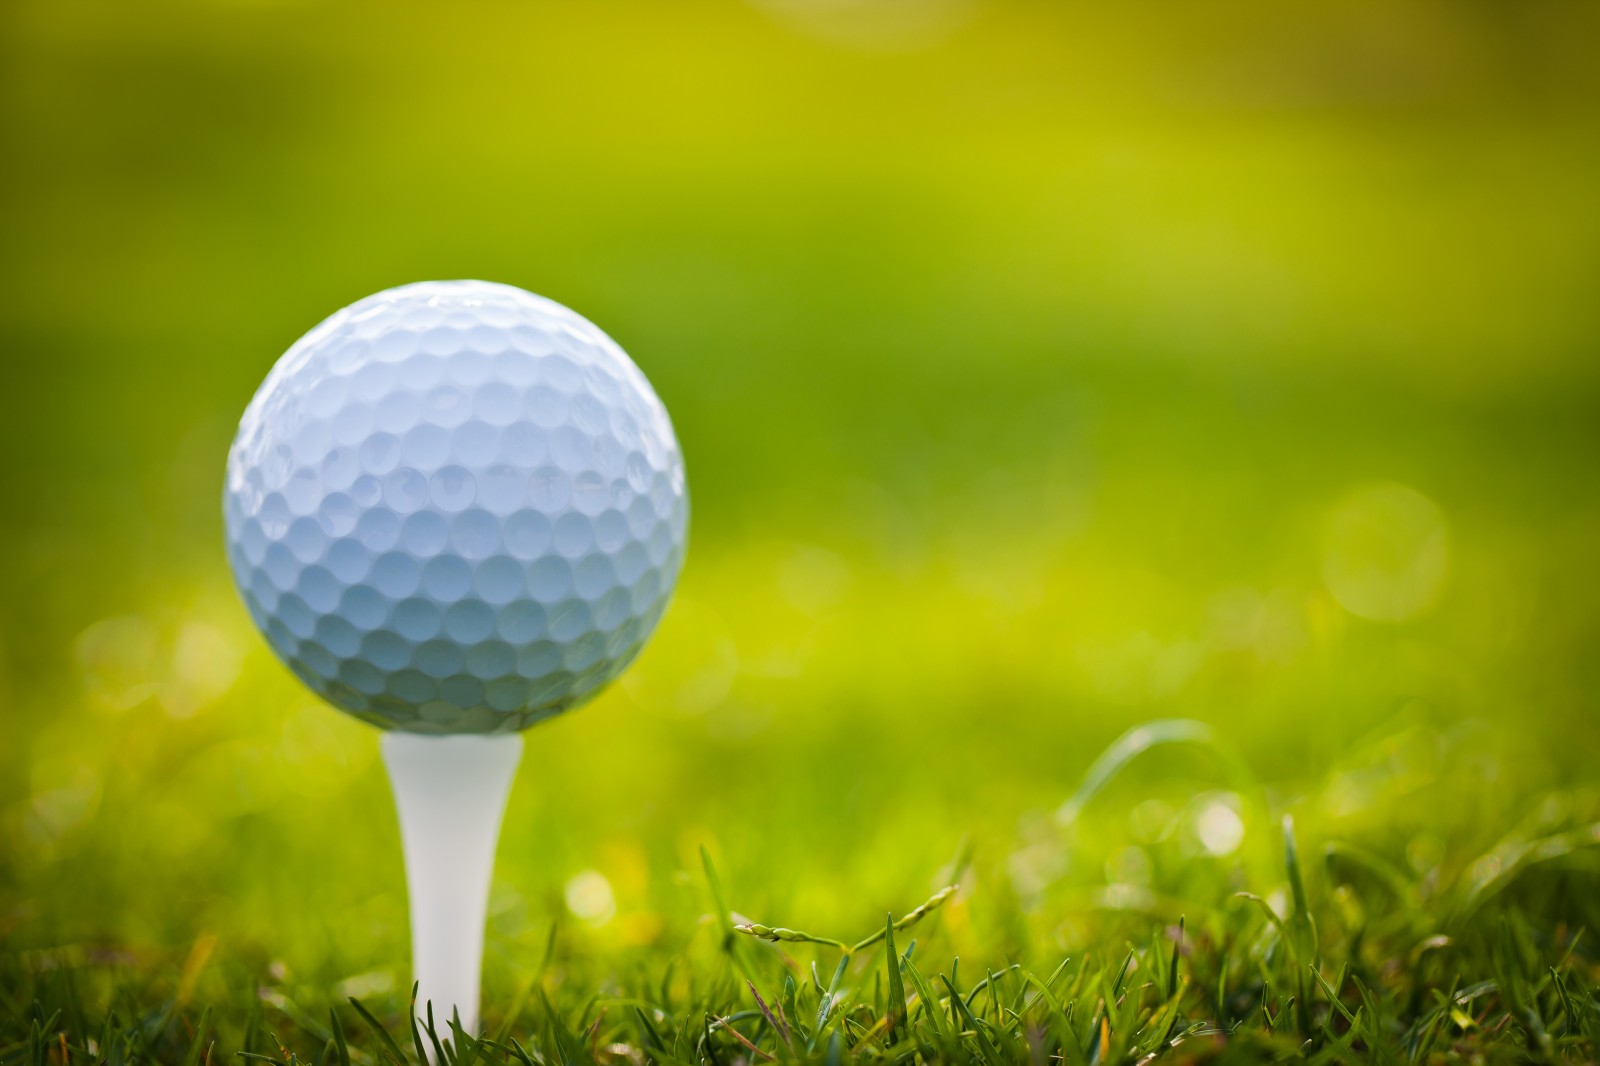 How far behind the tee marker can a golfer tee up their golf ball?